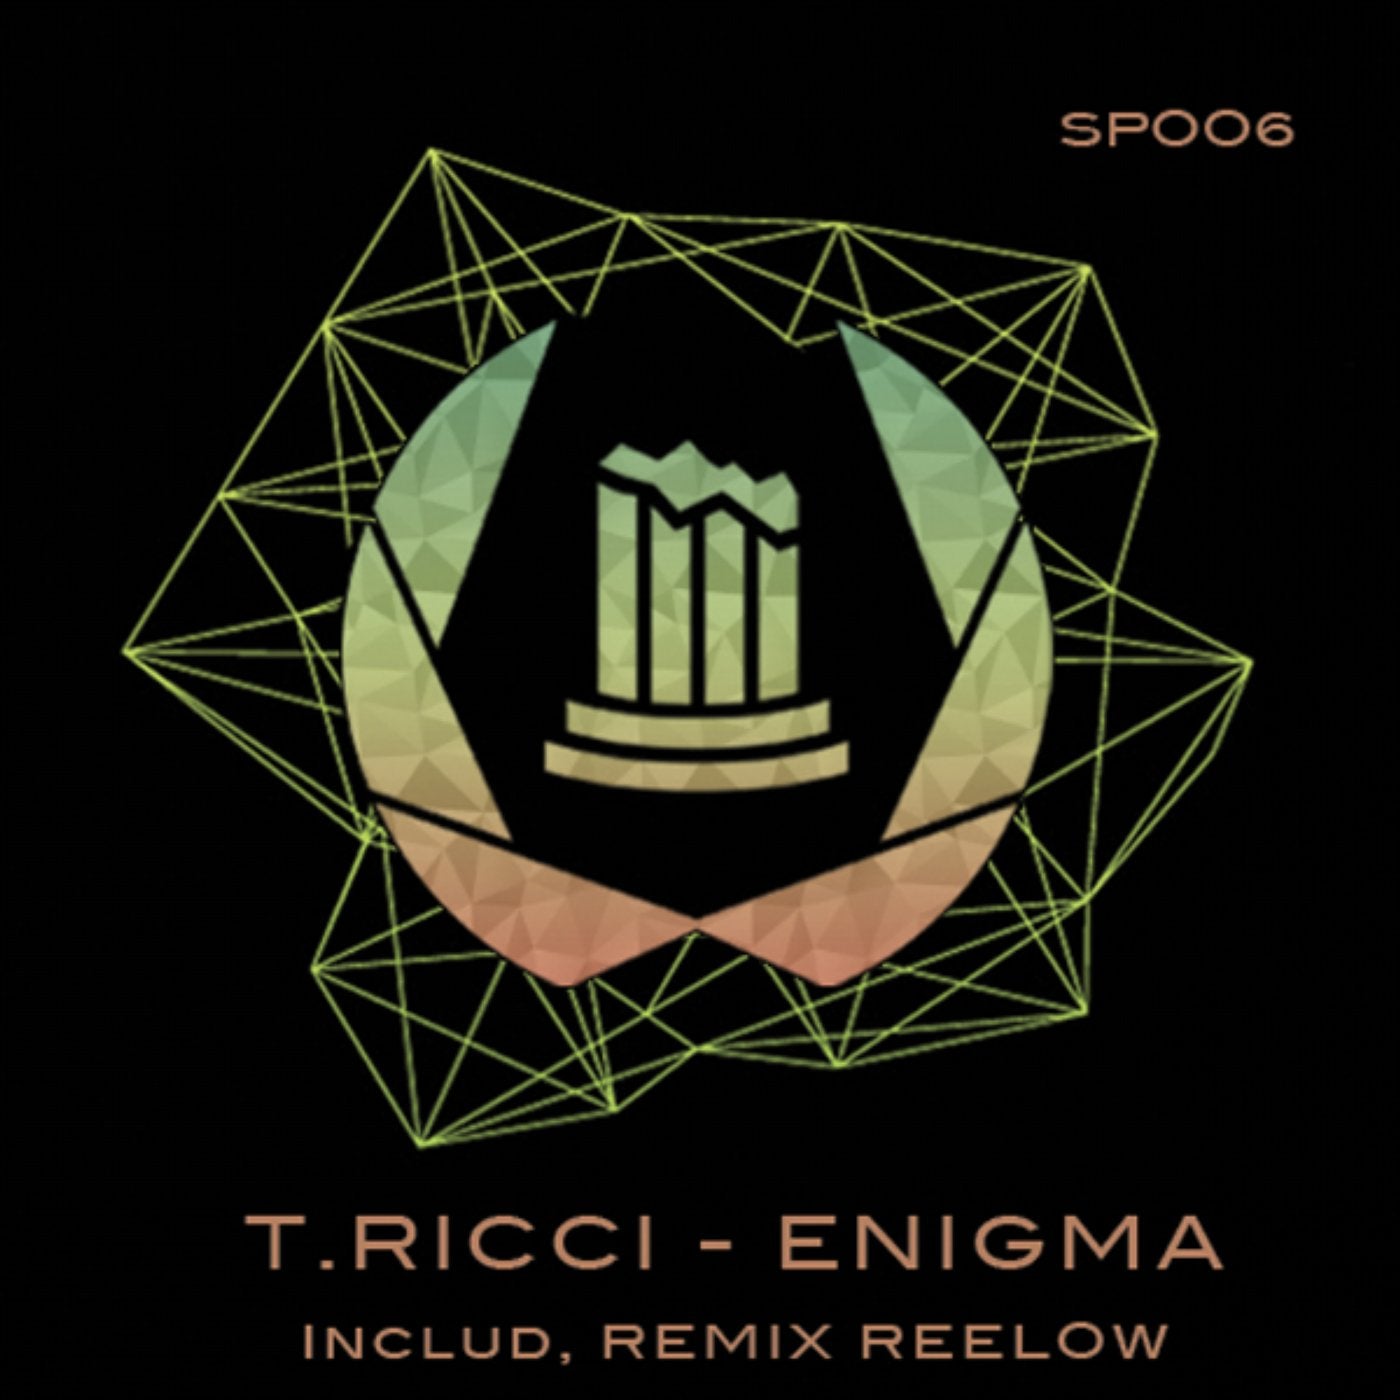 Enigma remix mp3. Enigma Remix. Enigma Mix.